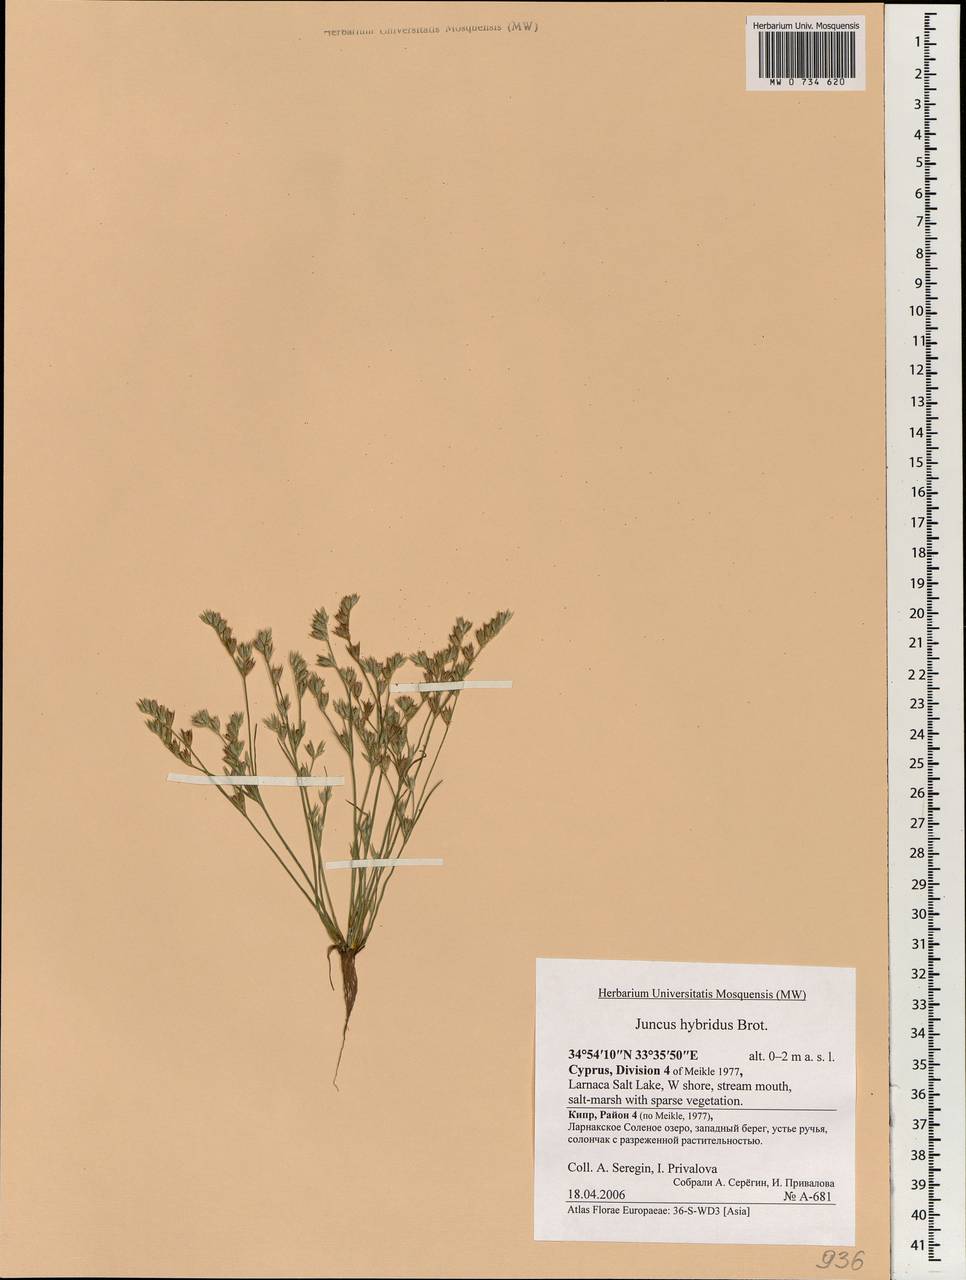 Juncus hybridus Brot., South Asia, South Asia (Asia outside ex-Soviet states and Mongolia) (ASIA) (Cyprus)